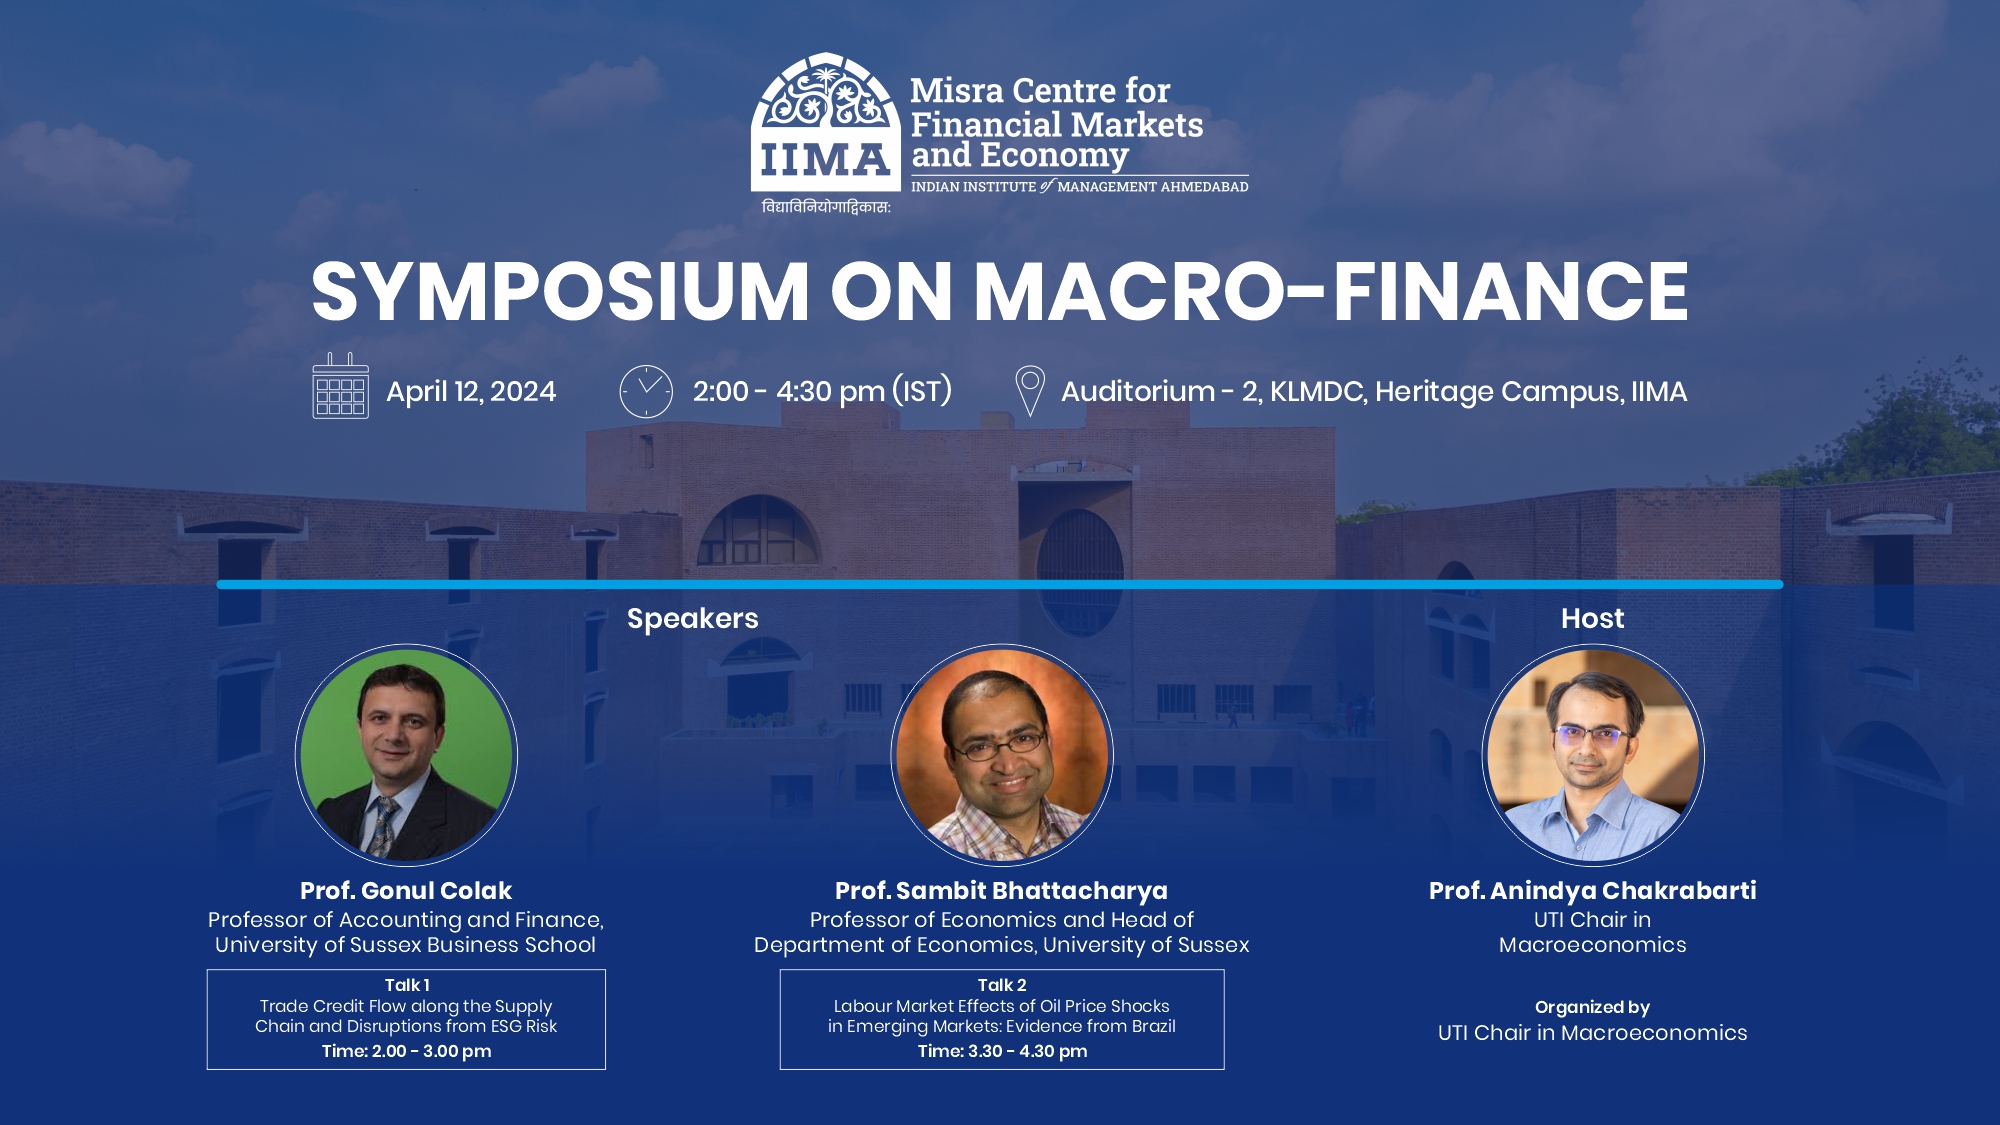 Symposium on Macro-Finance